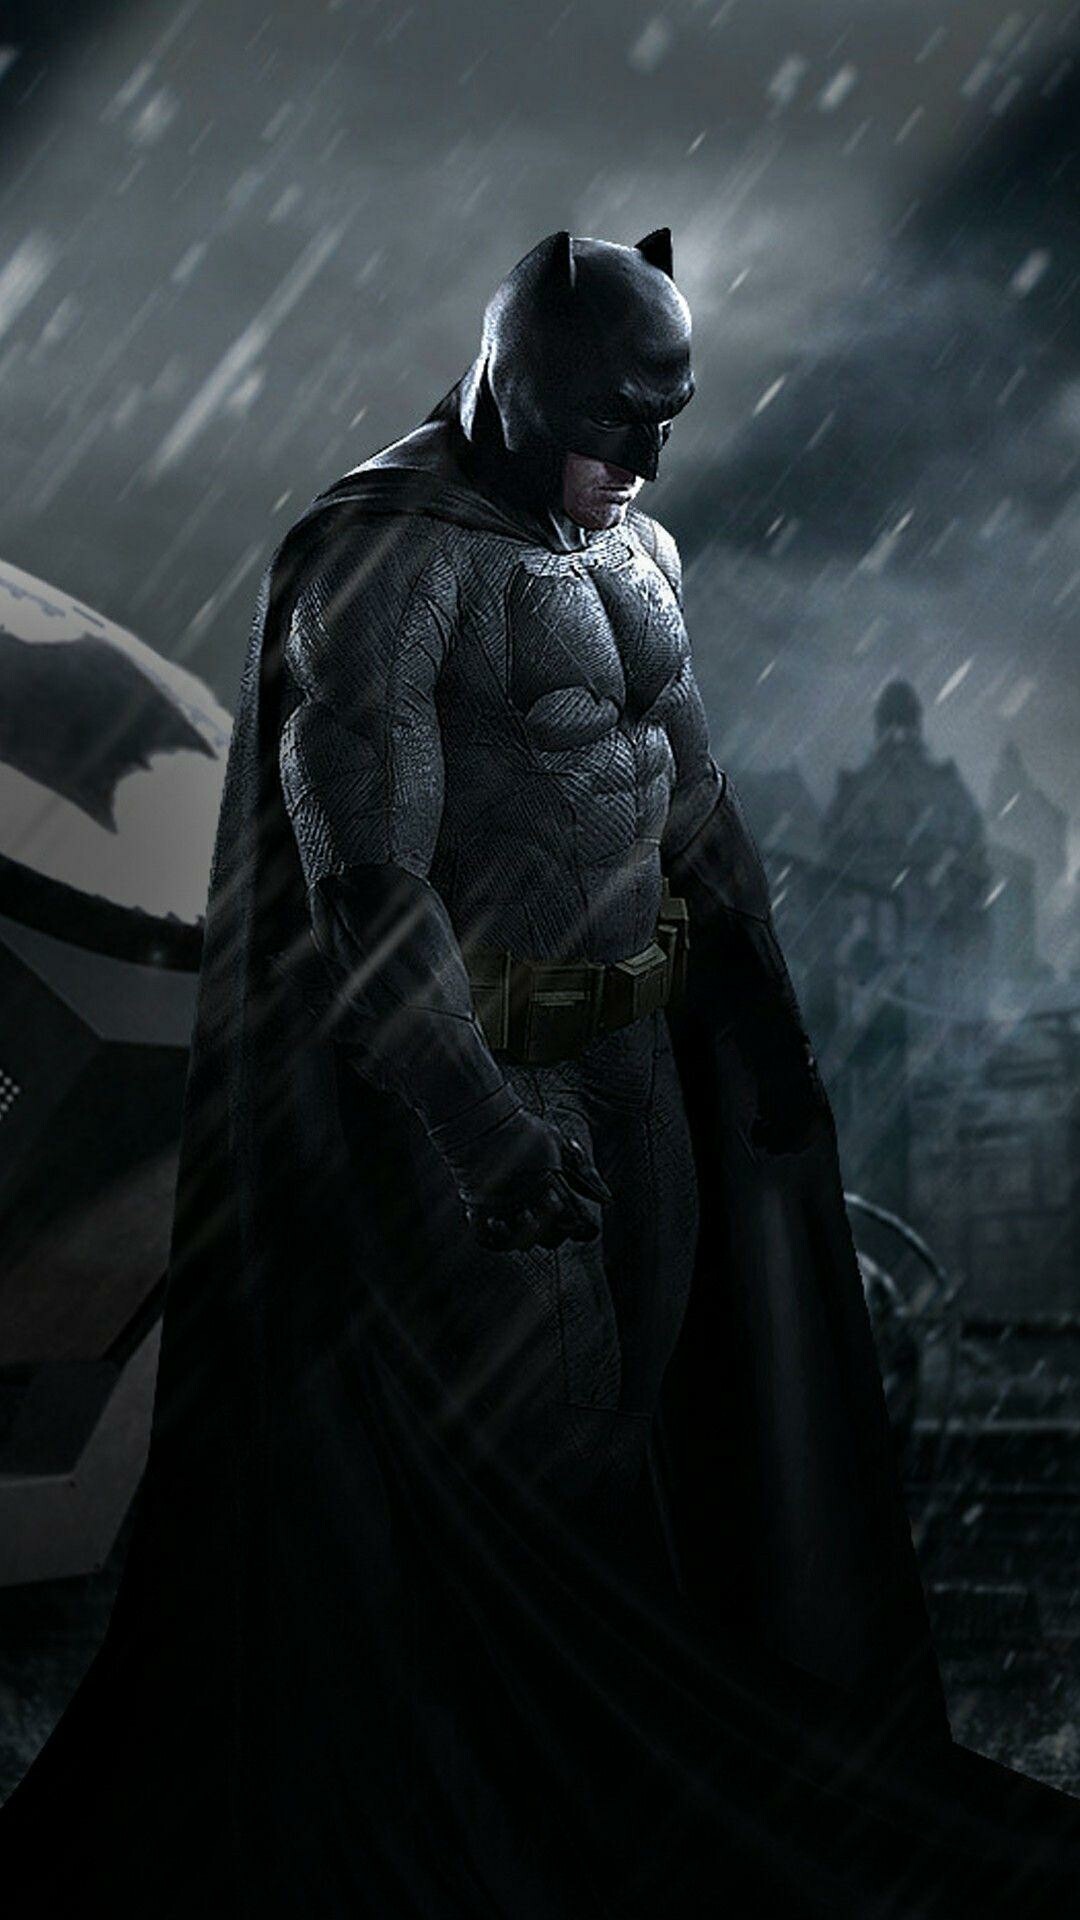 DC: Ben Affleck as Batman, a billionaire socialite who dedicates himself to protecting Gotham City. 1080x1920 Full HD Wallpaper.